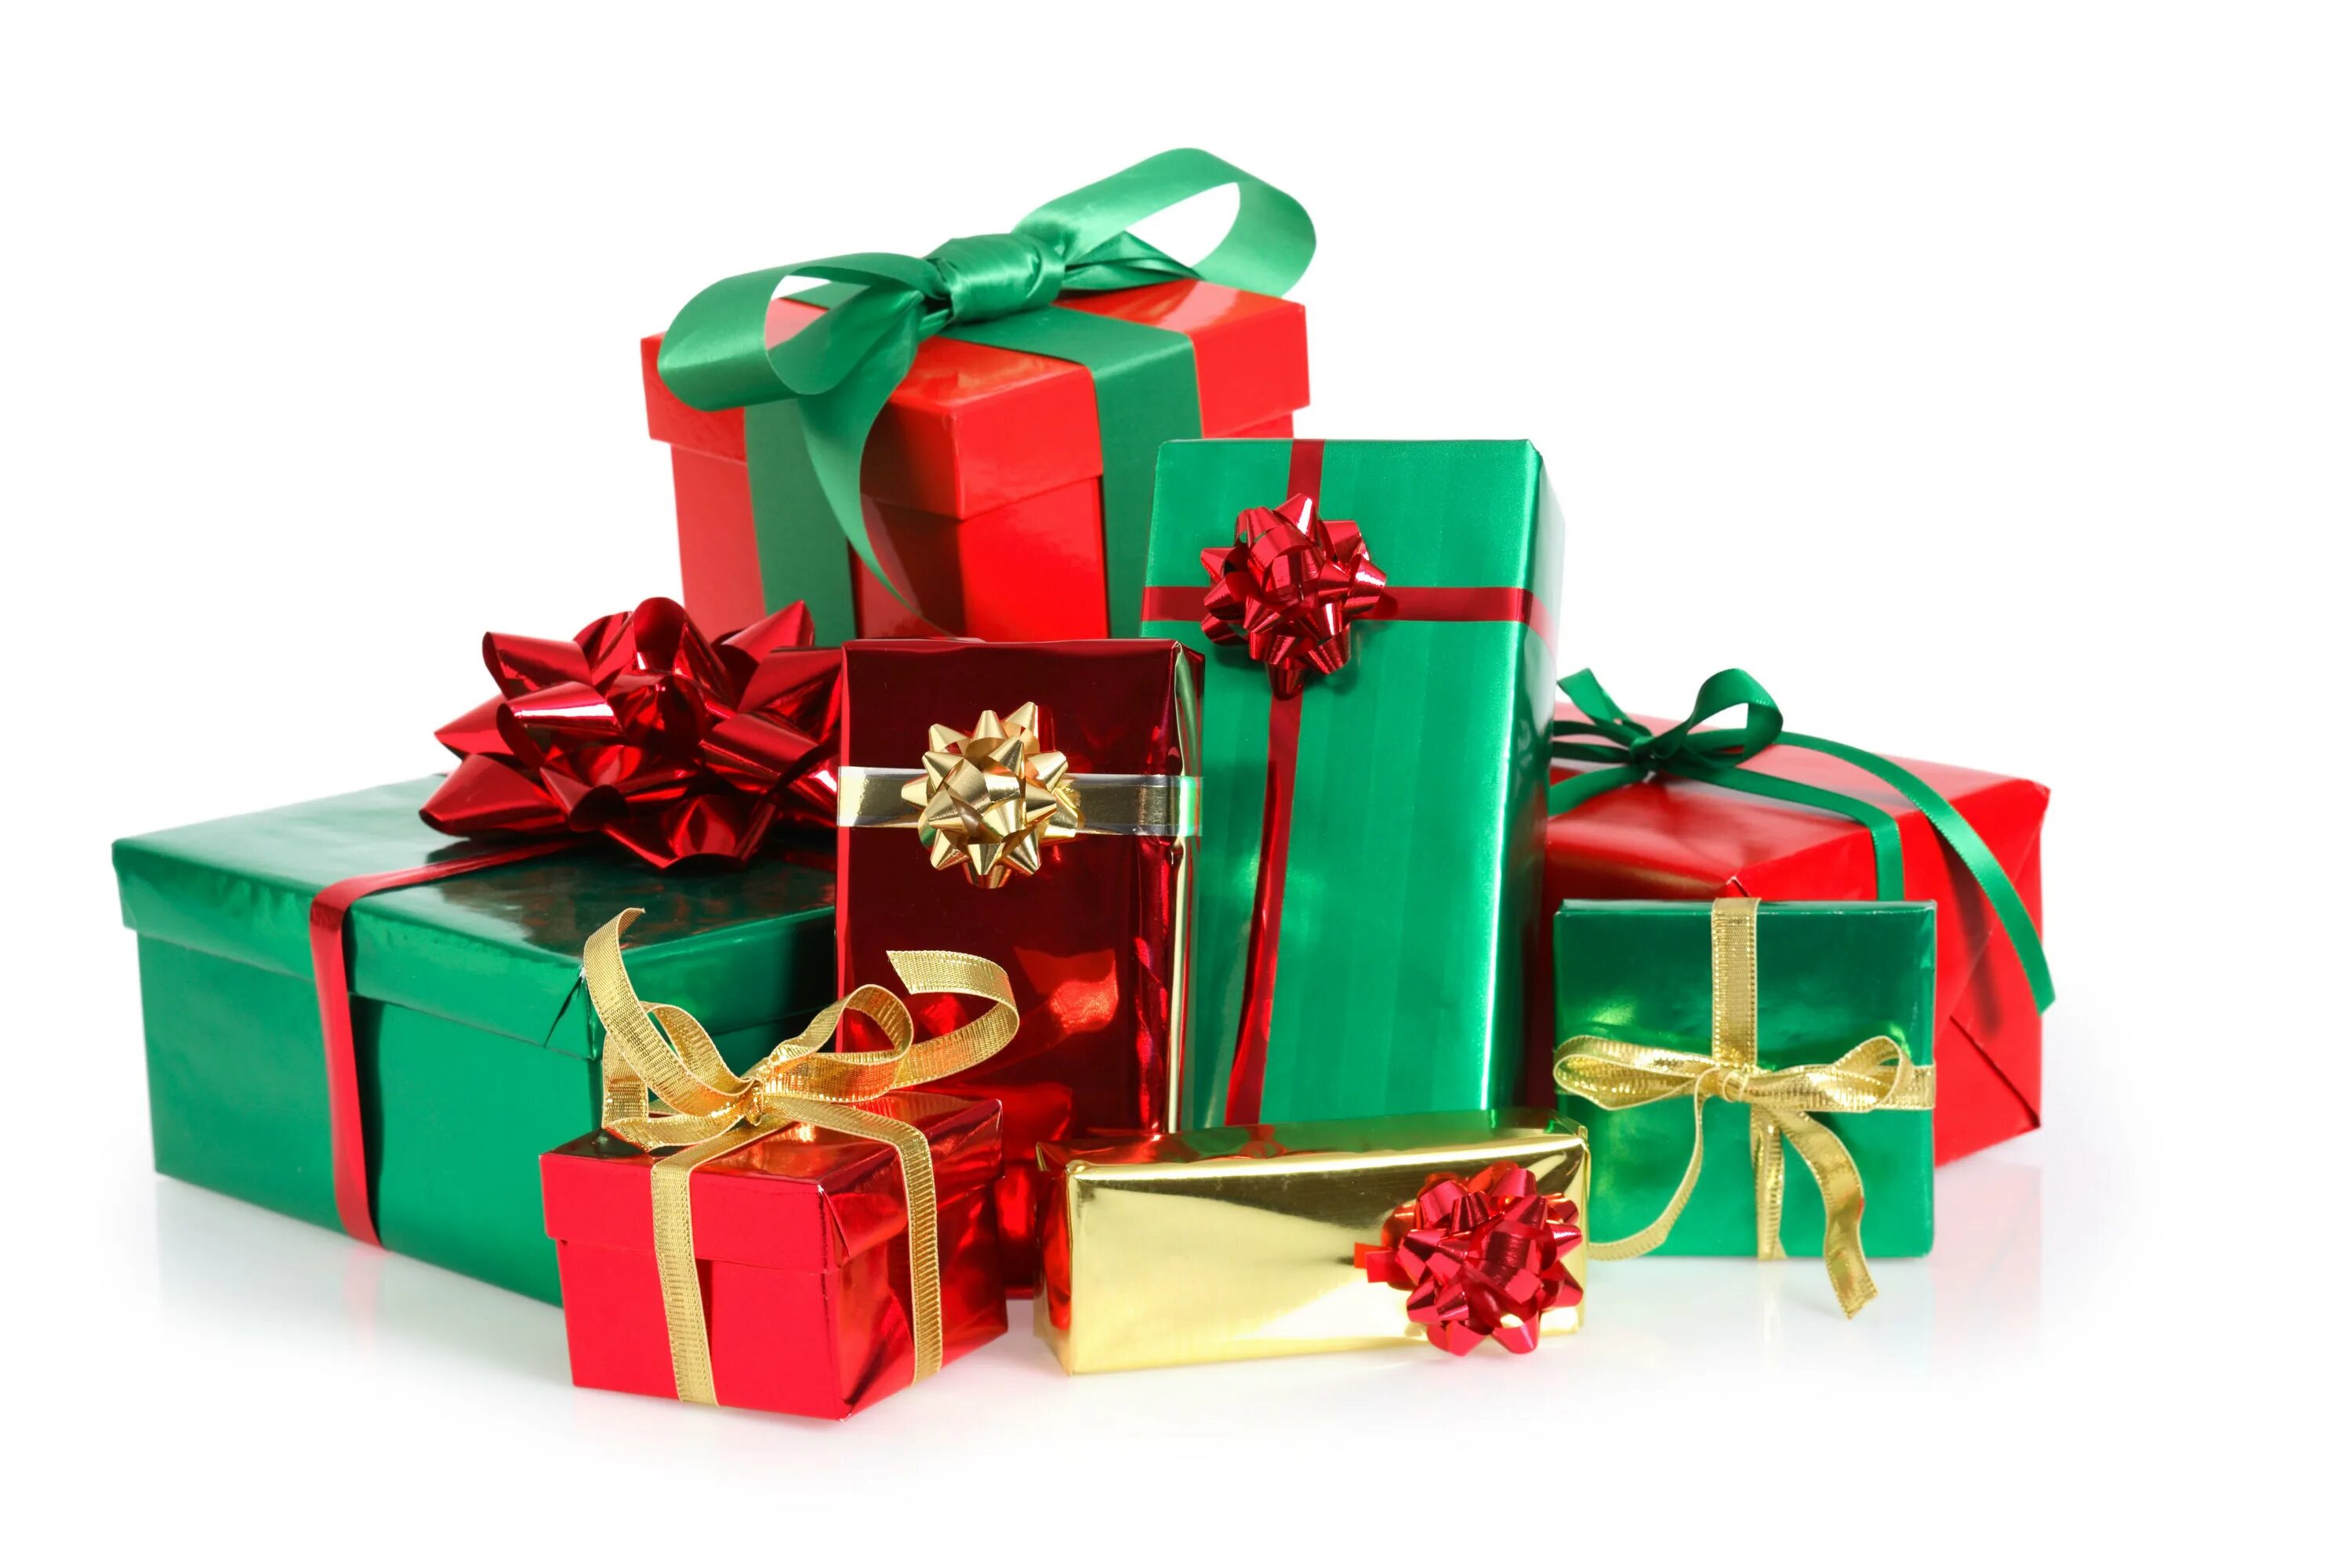 Presents post. Новогодние подарки. Новогодние коробки для подарков. Подарки под ёлкой. Коробки с подарками под елку.